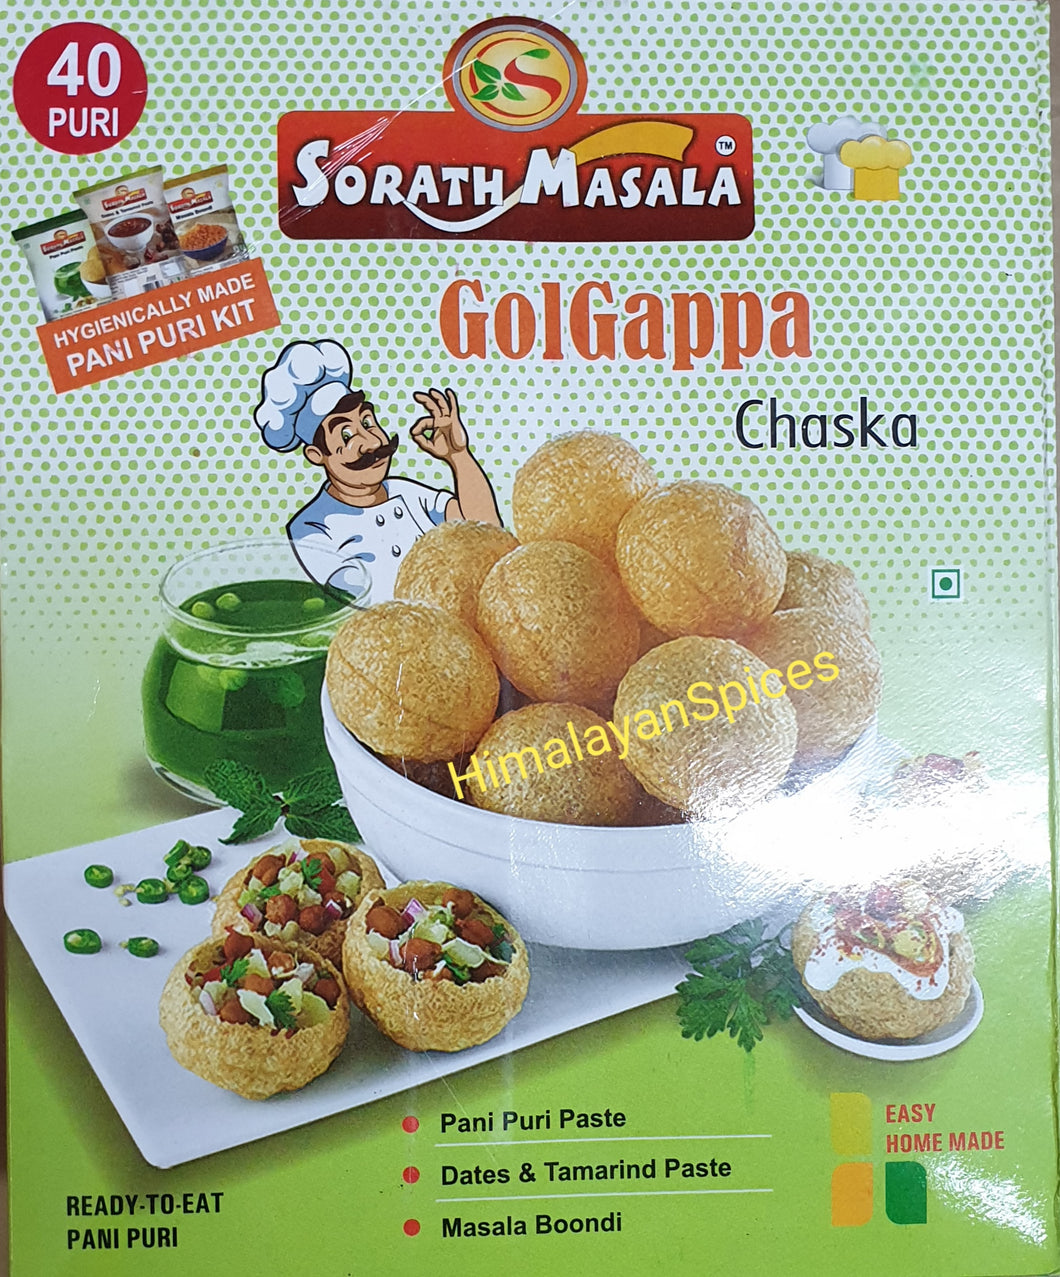 Sorath Masala GolGappa Chaska Panipuri (40 Puri) Ready Eat

Pani  Puri Kit